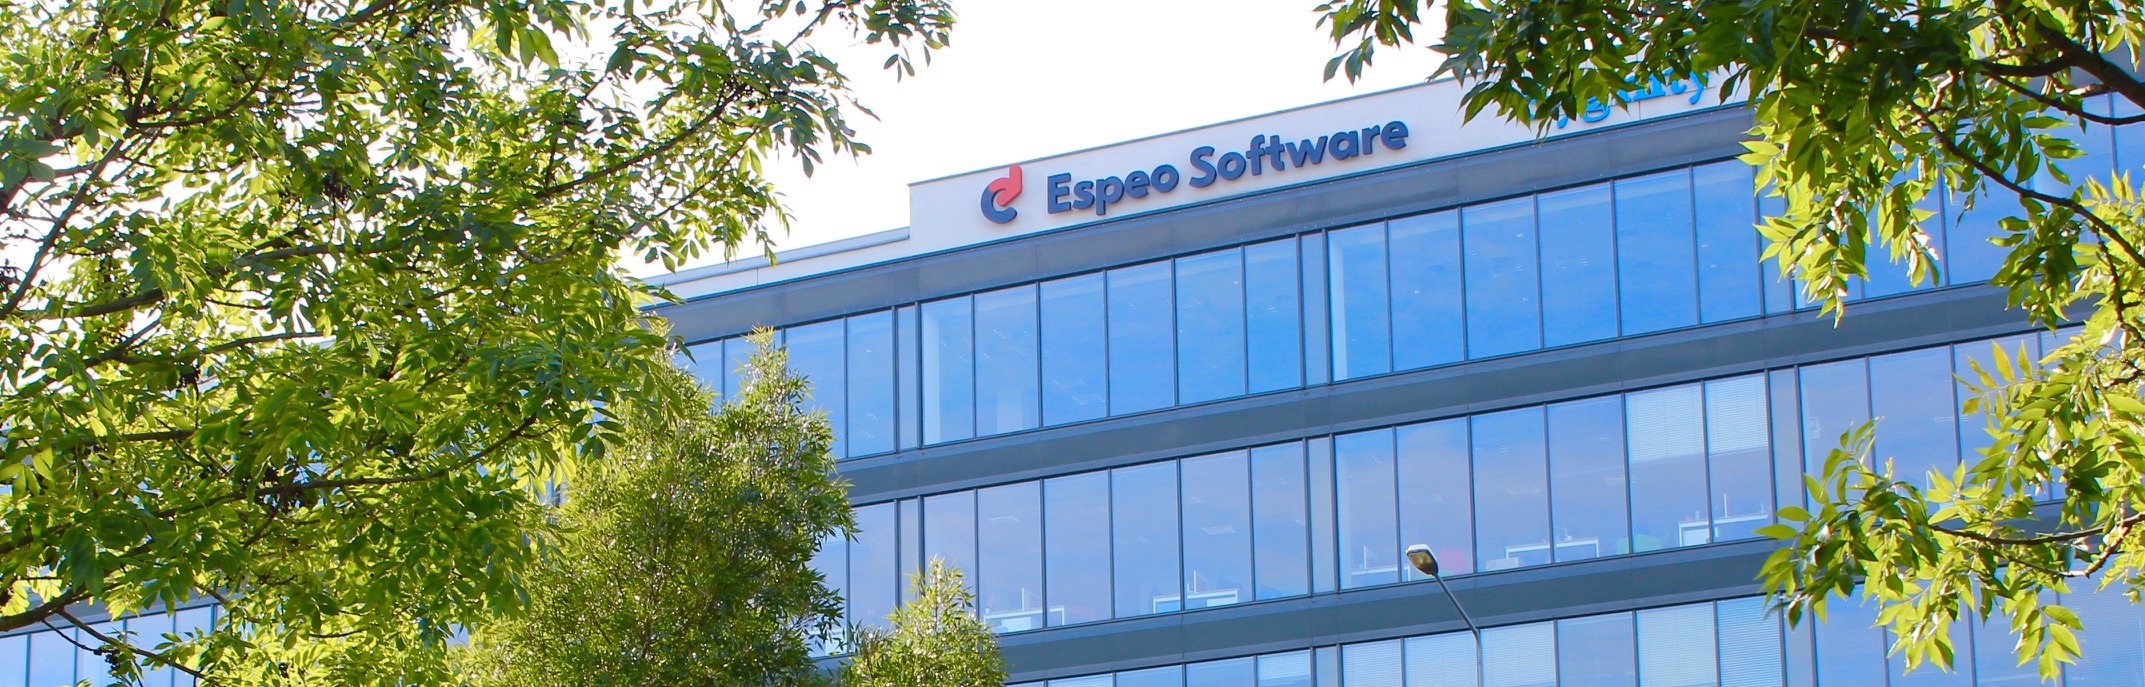 Clutch Lists Espeo Software as Top Development Company in Switzerland